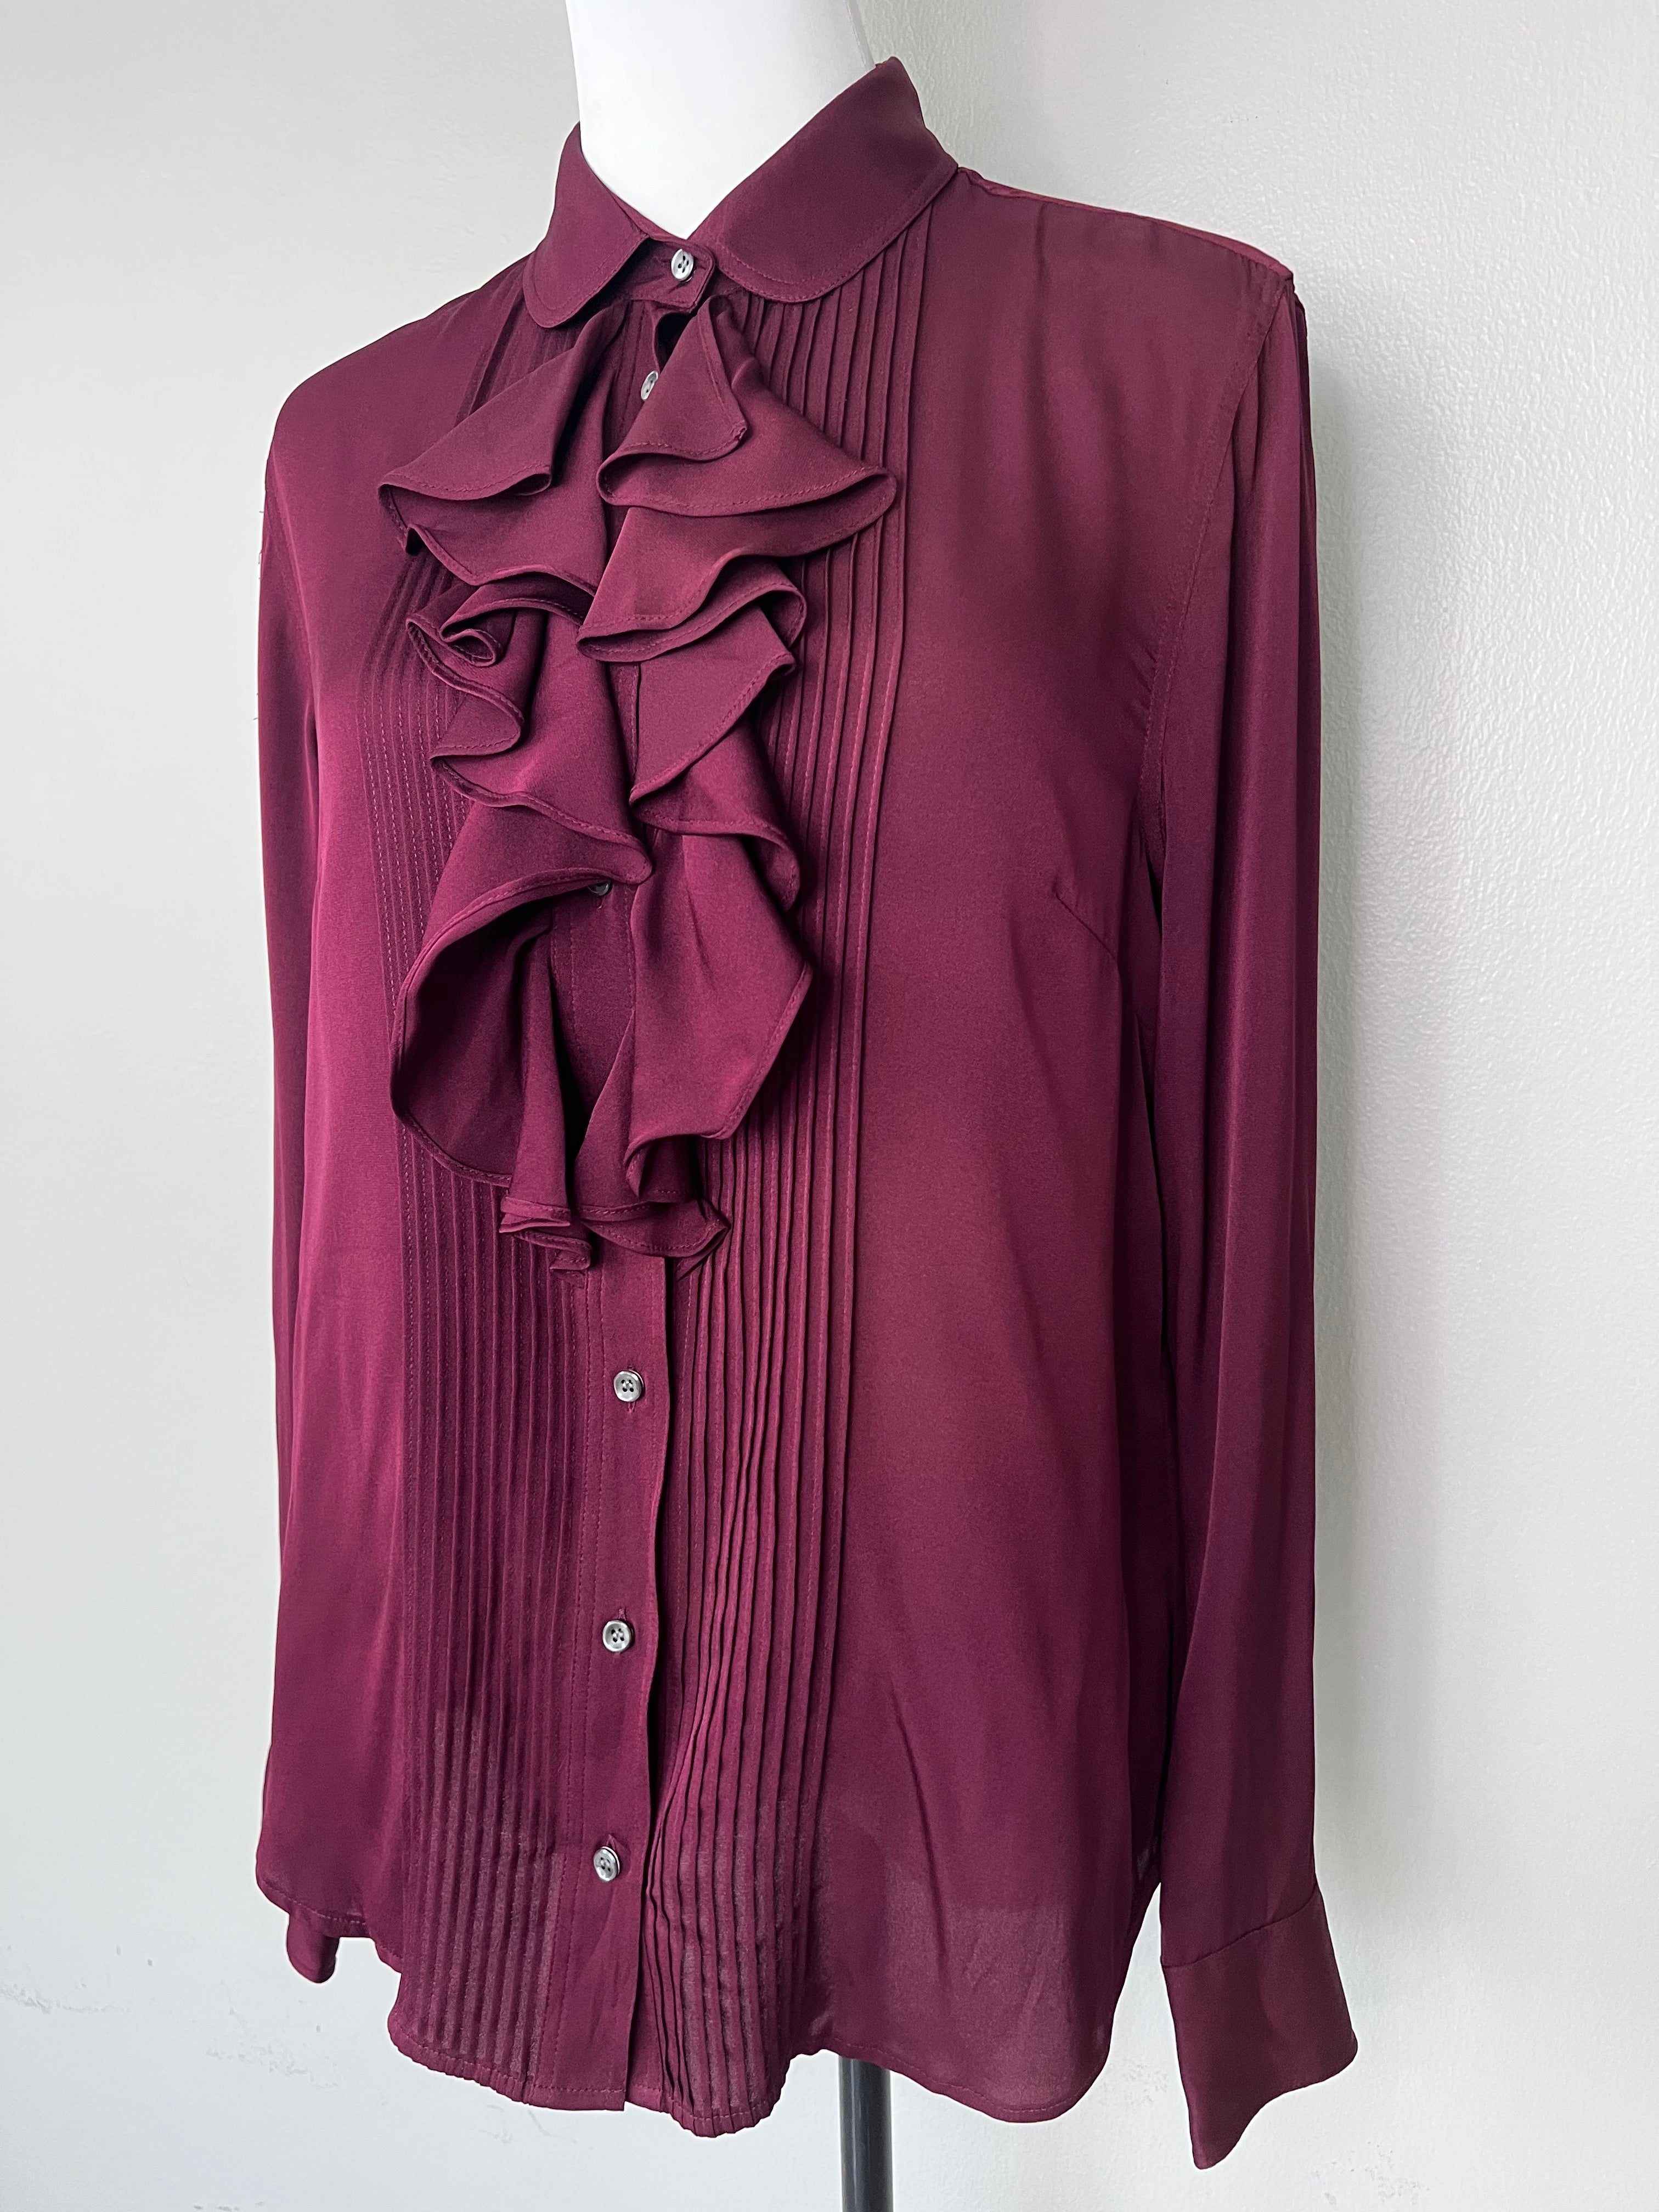 silk maroon shirt with ruffle details - Massimo Dutti